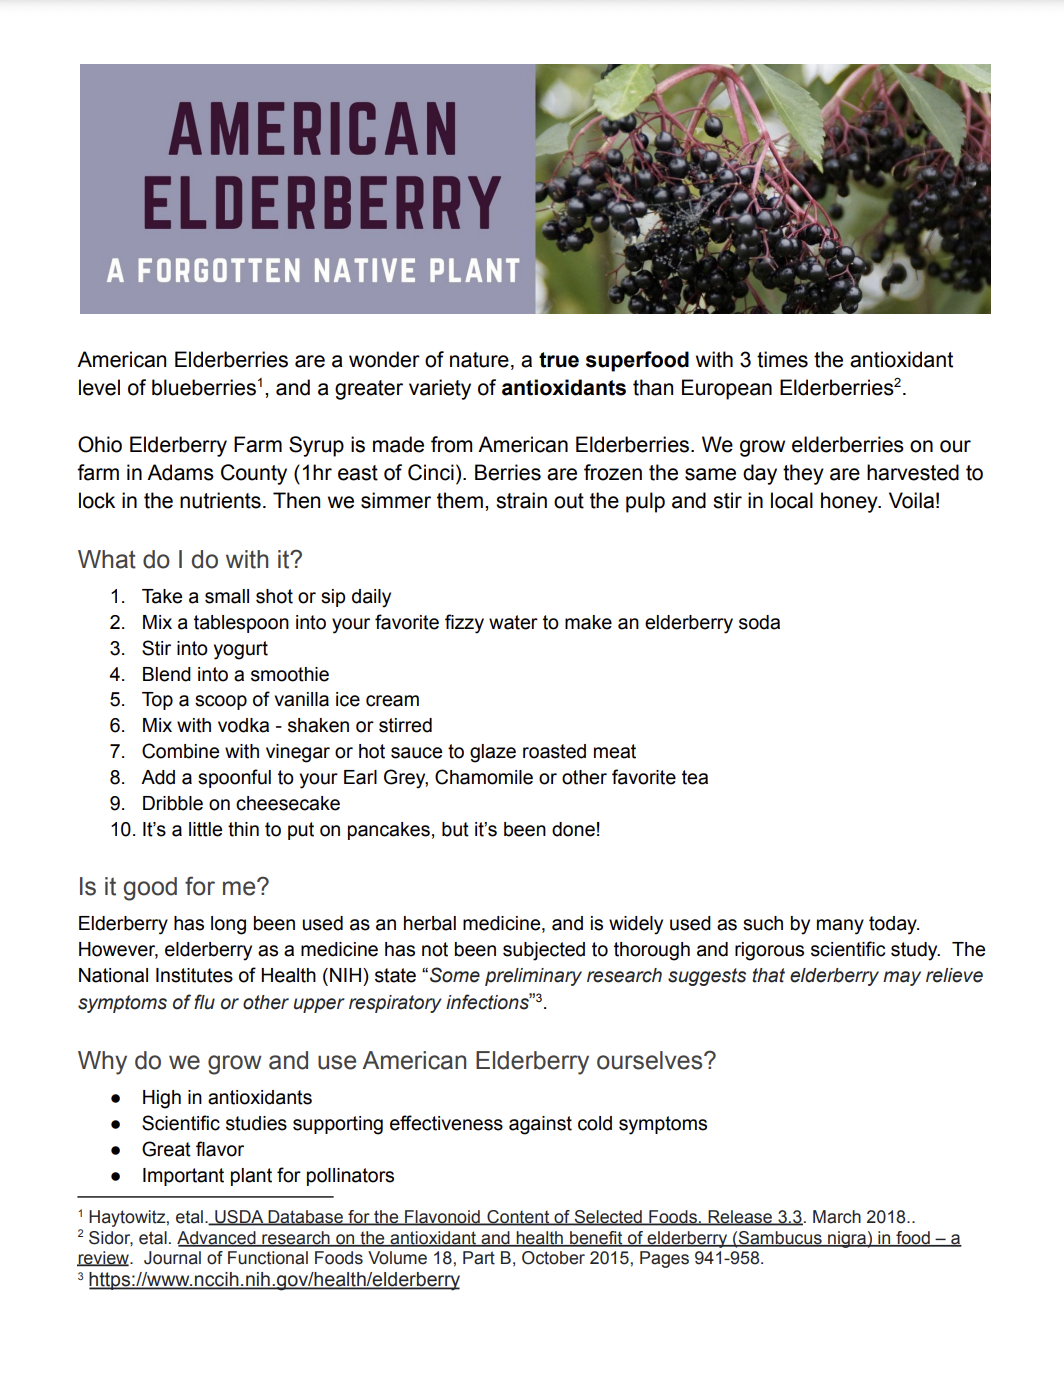 Elderberry Handout Cover Image